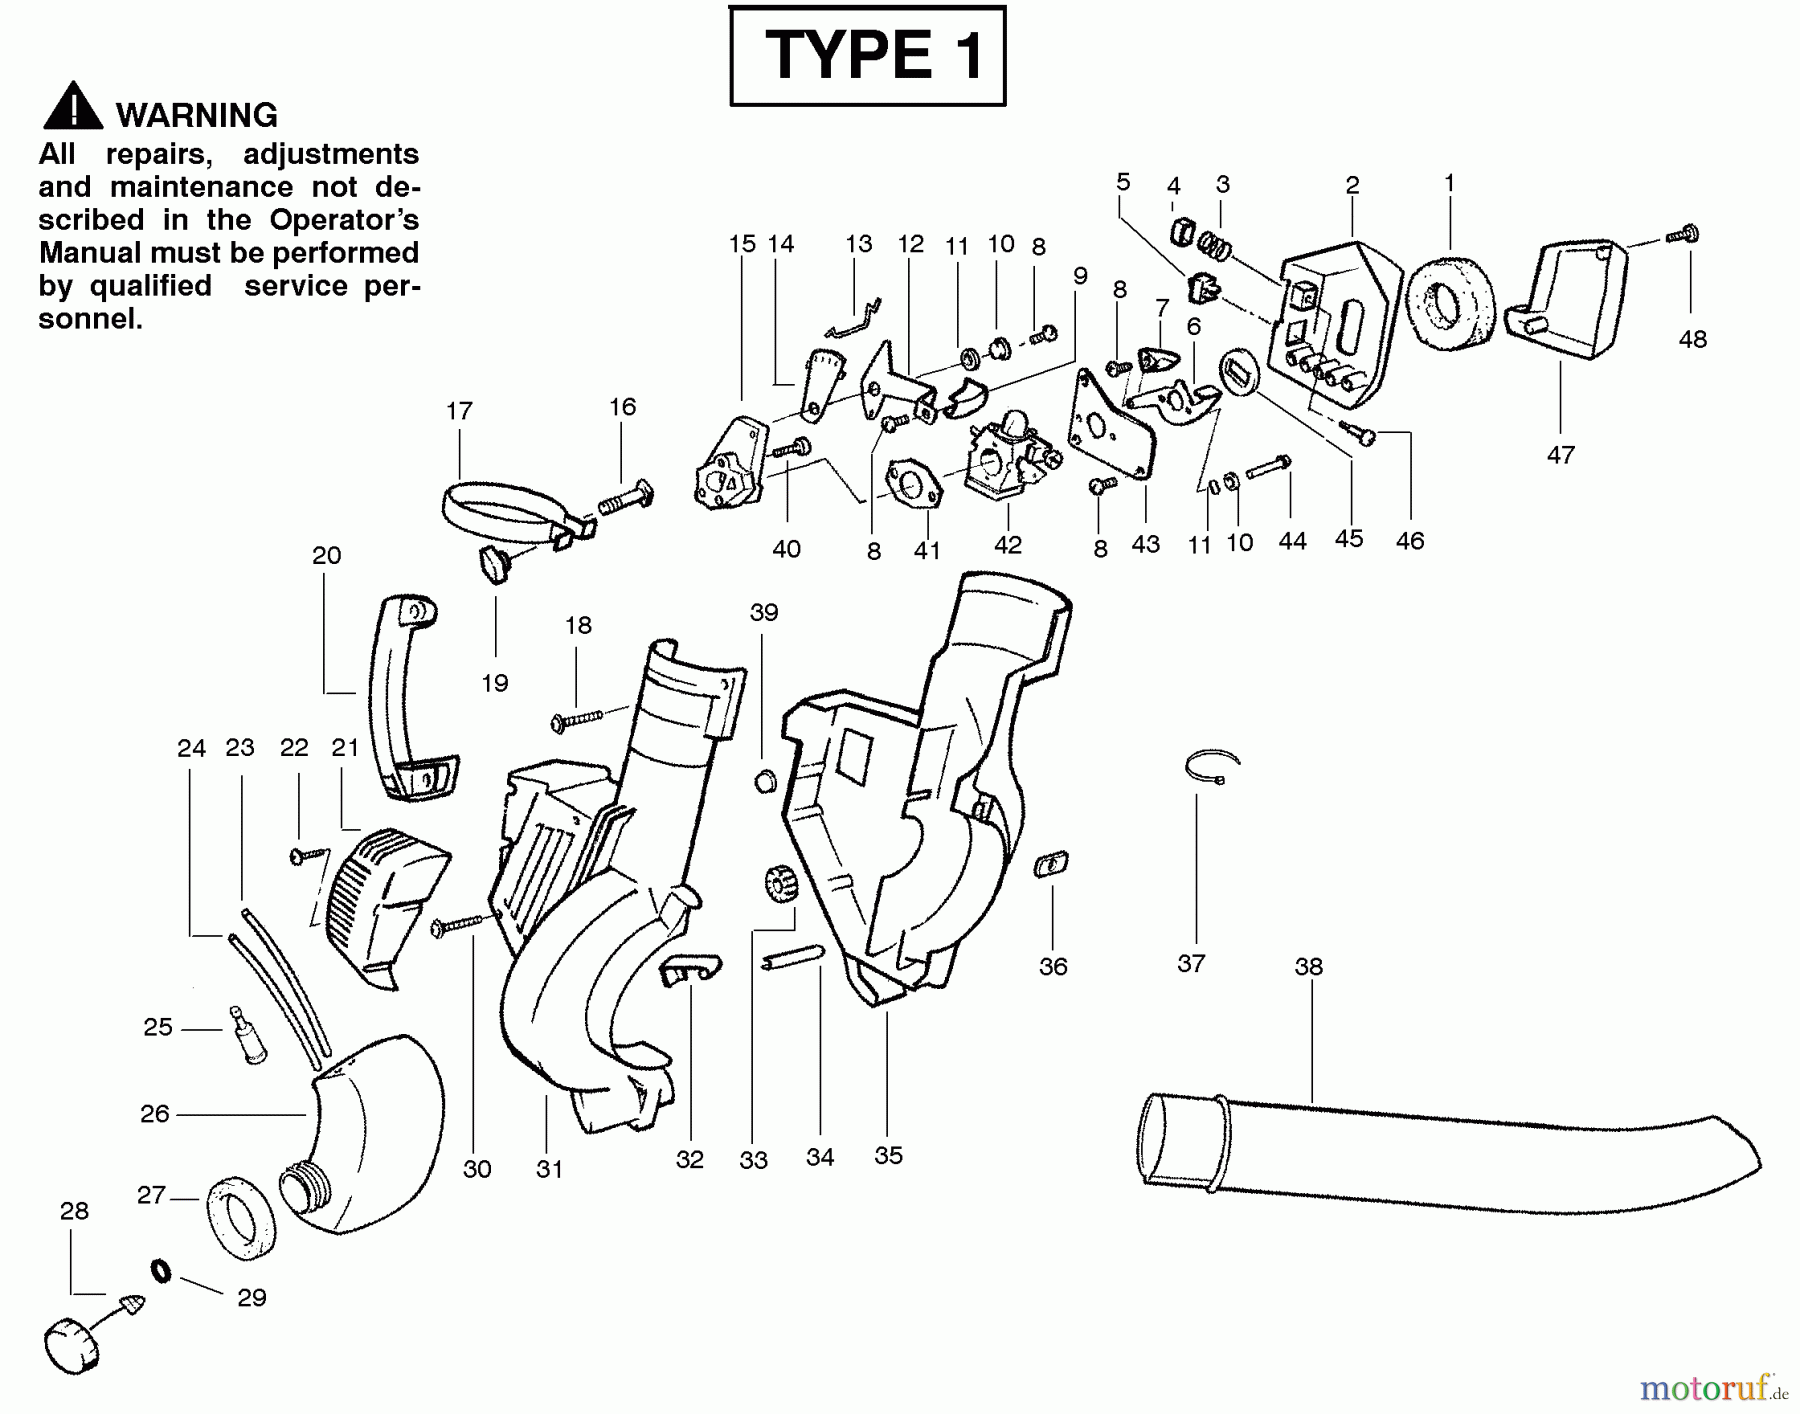  Poulan / Weed Eater Bläser / Sauger / Häcksler / Mulchgeräte PPBVM200 (Type 1) - Poulan Pro Blower Handle, Chassis & Blower Assembly Type 1